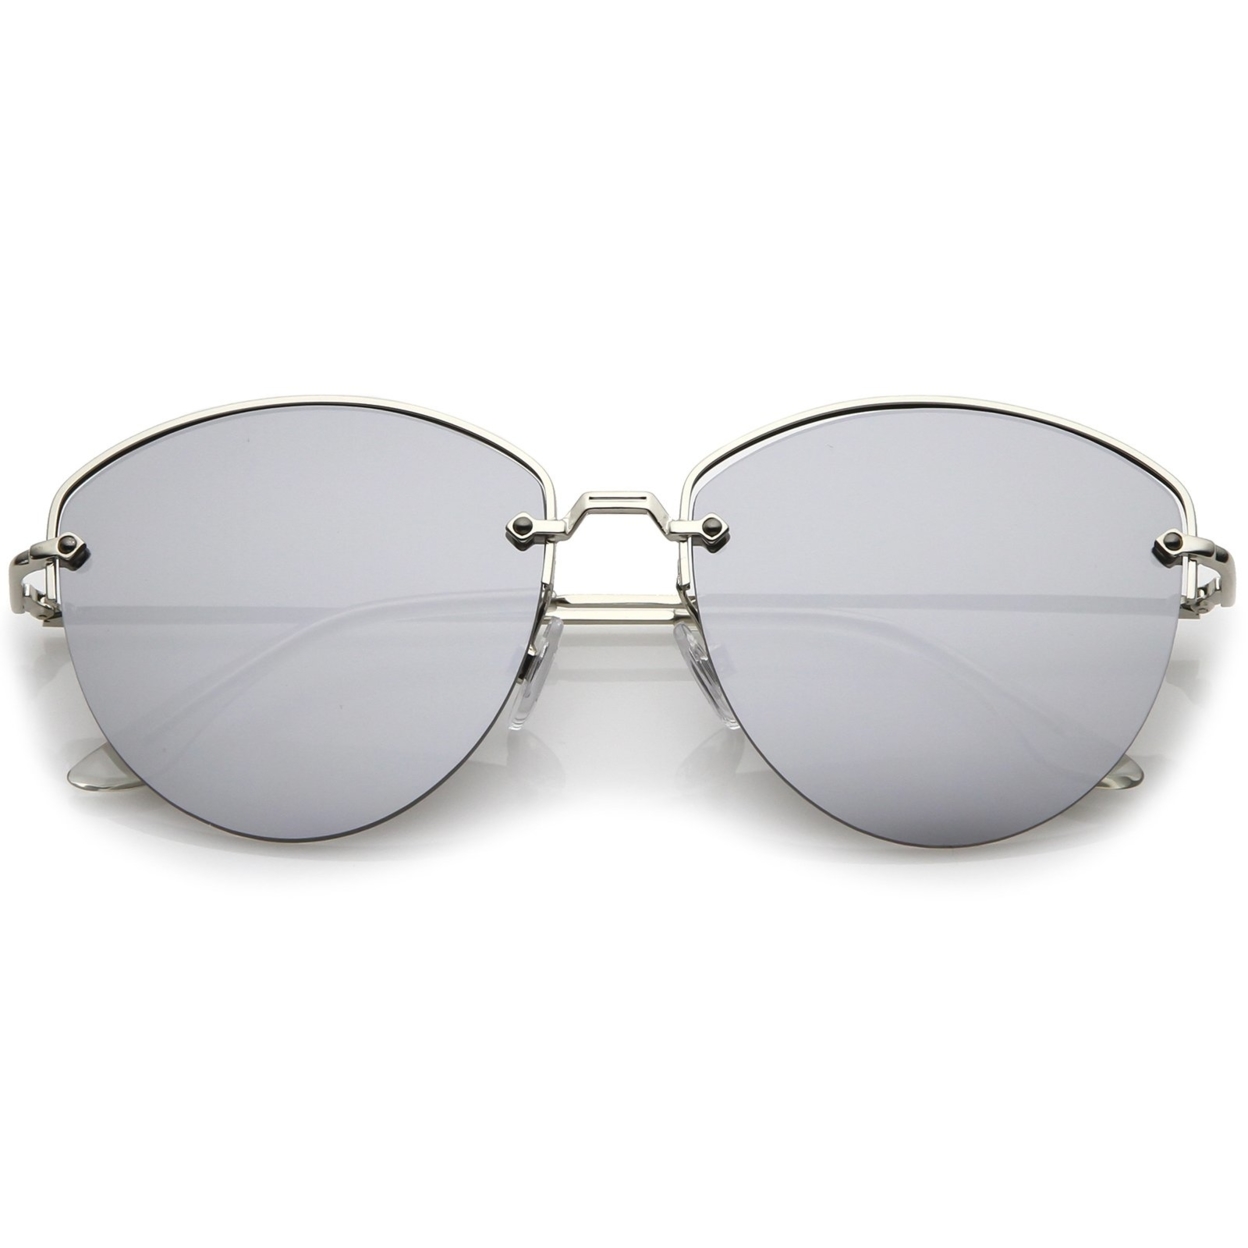 Modern Metal Nose Bridge Mirrored Flat Lens Semi-Rimless Sunglasses 60mm - Gold / Pink Mirror